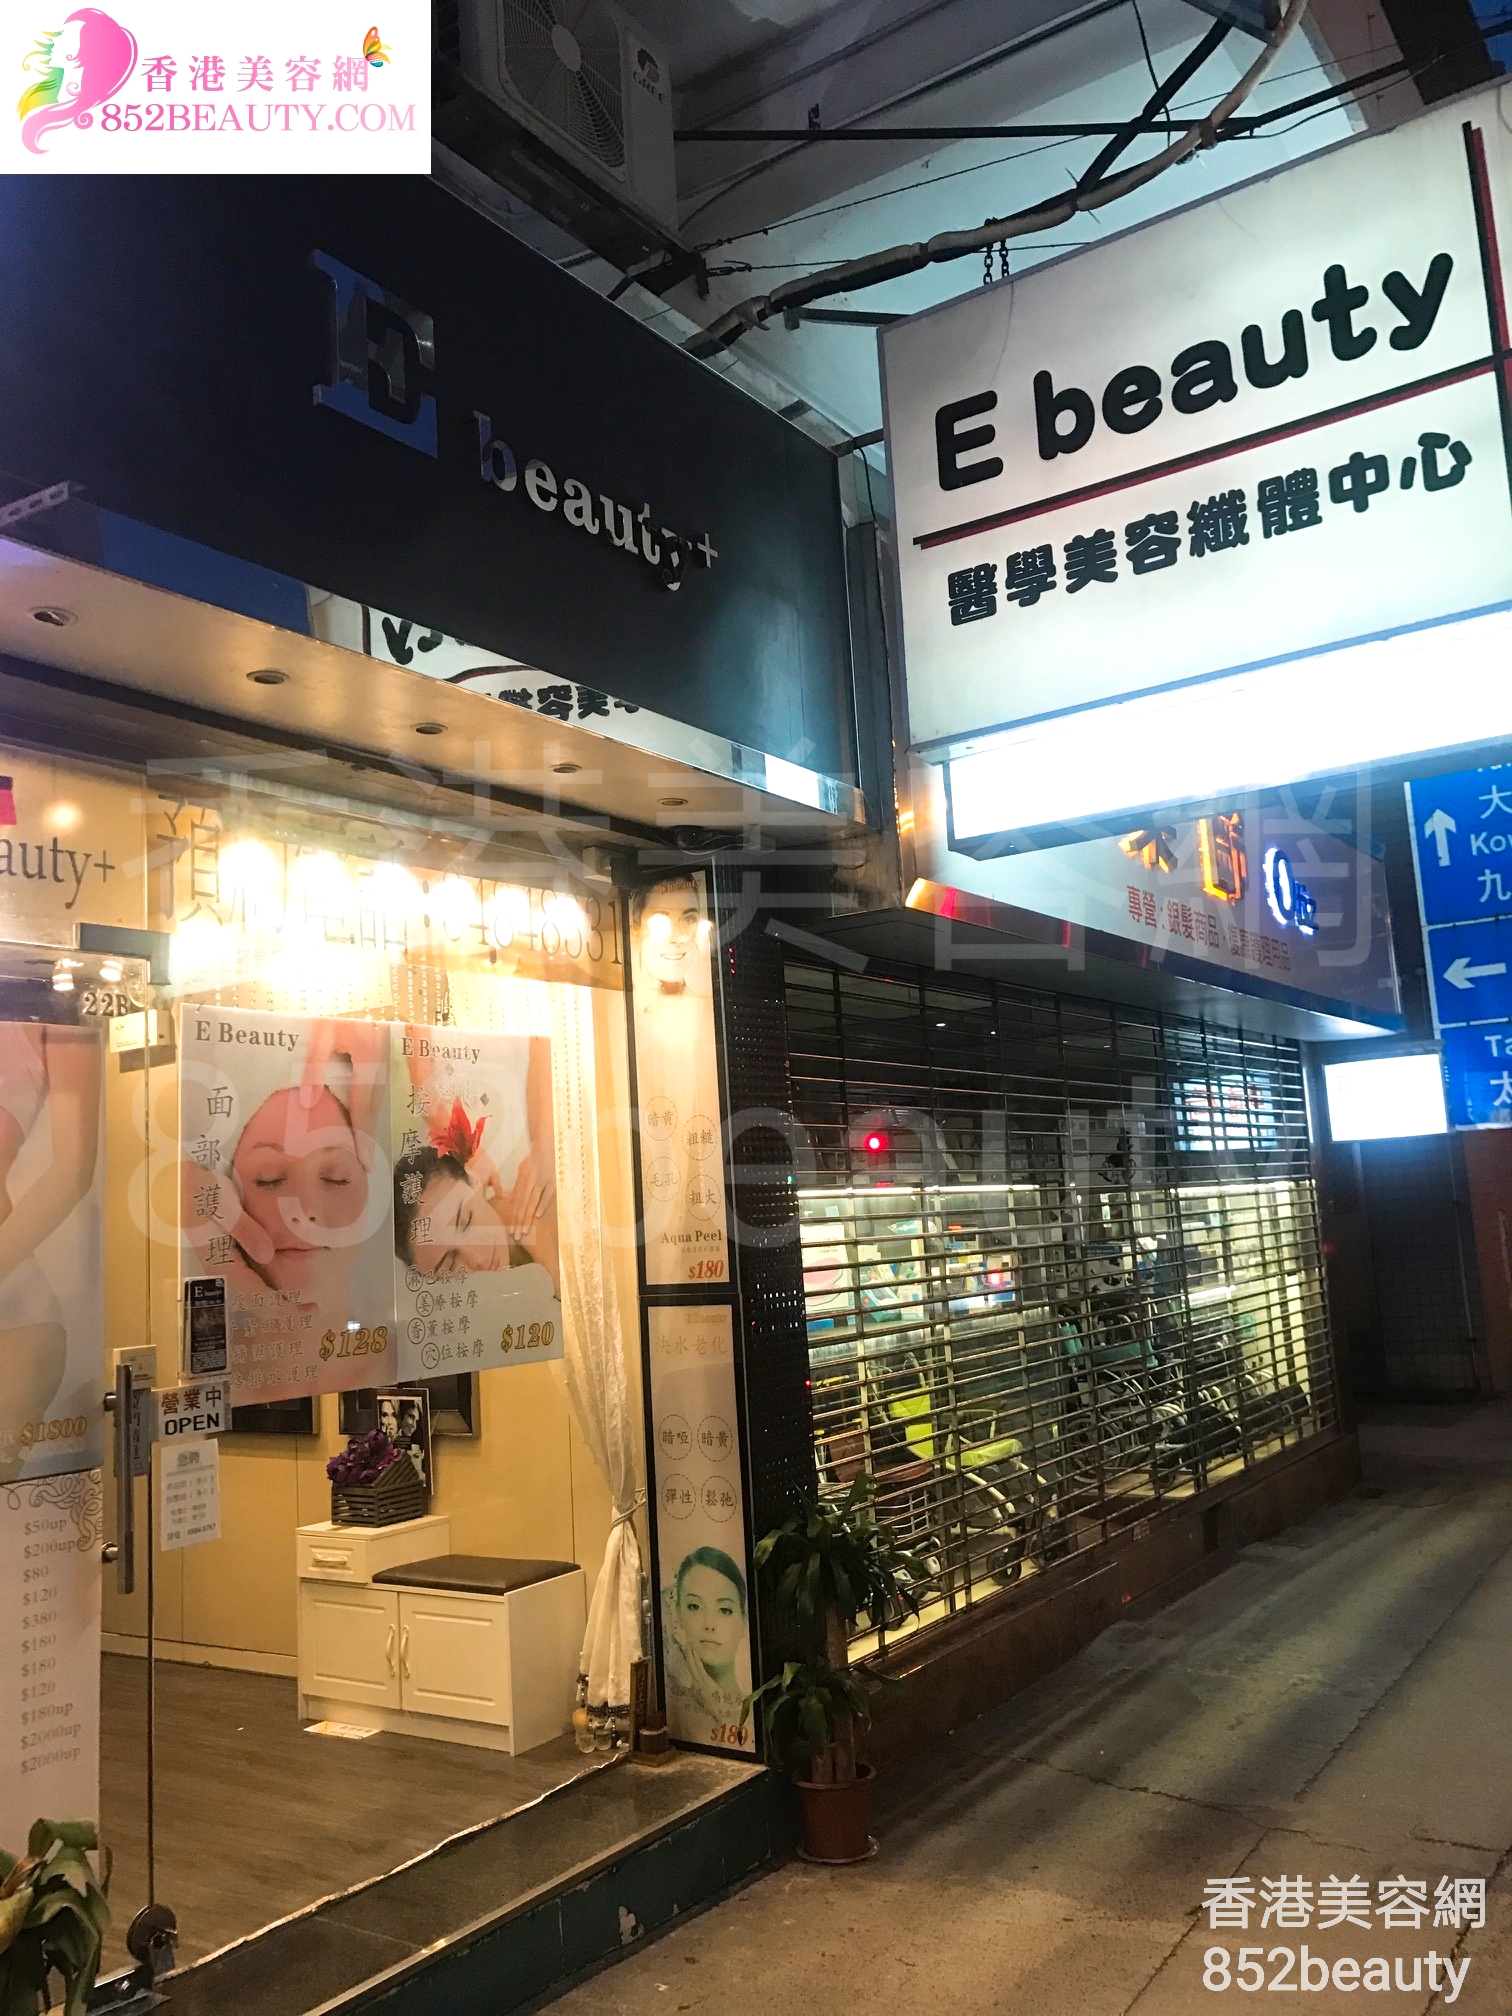 美容院: E beauty